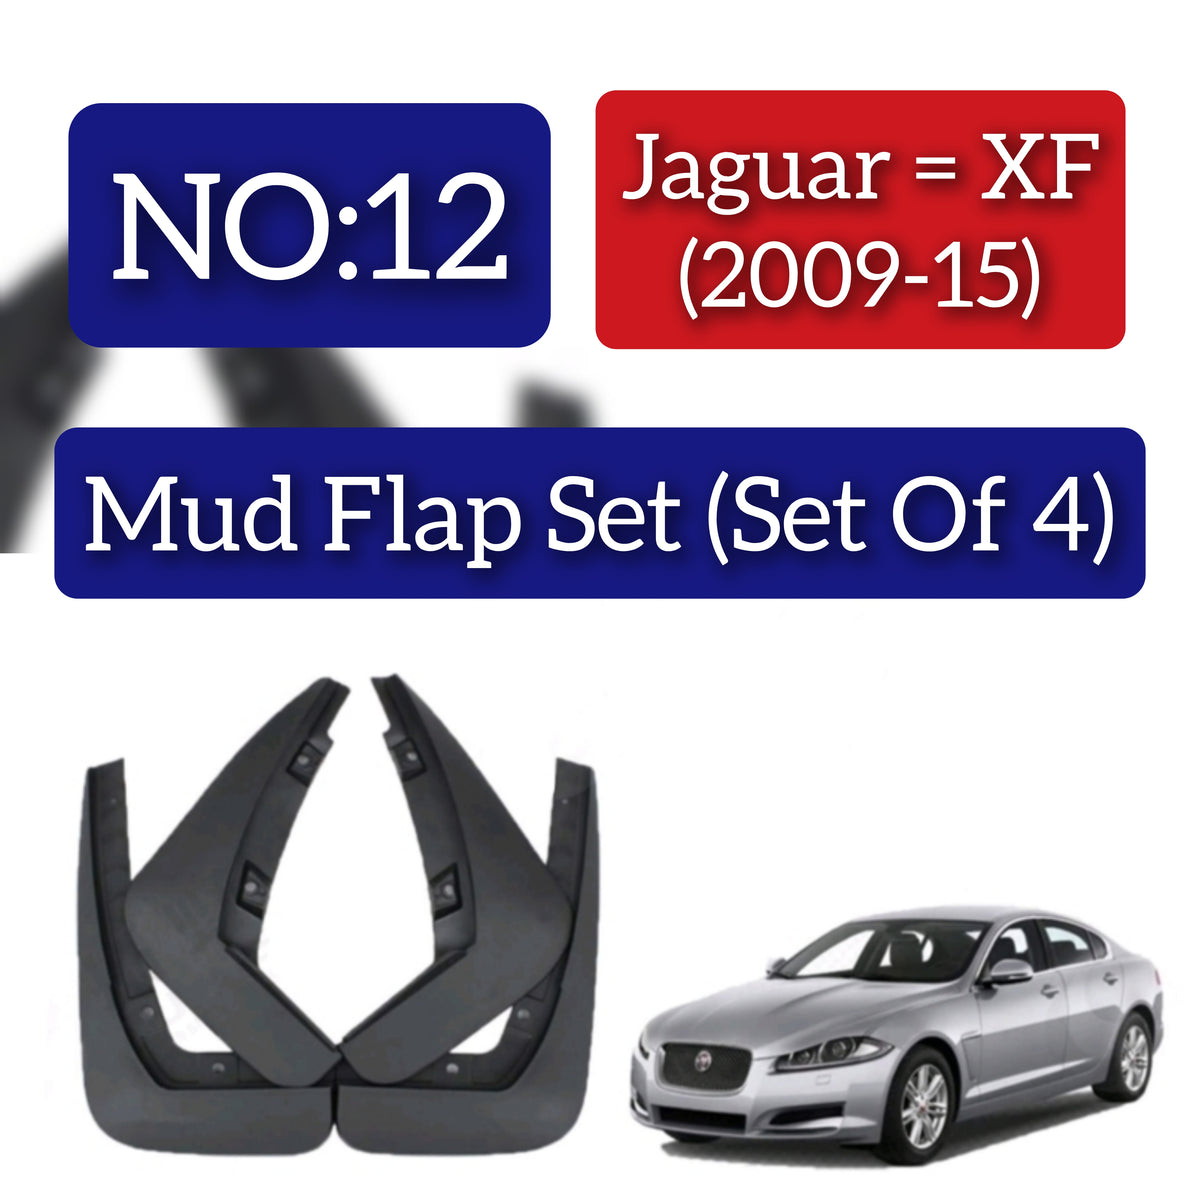 Jaguar = XF (2009-15) Mud Flap Set (Set of 4) Tag 12